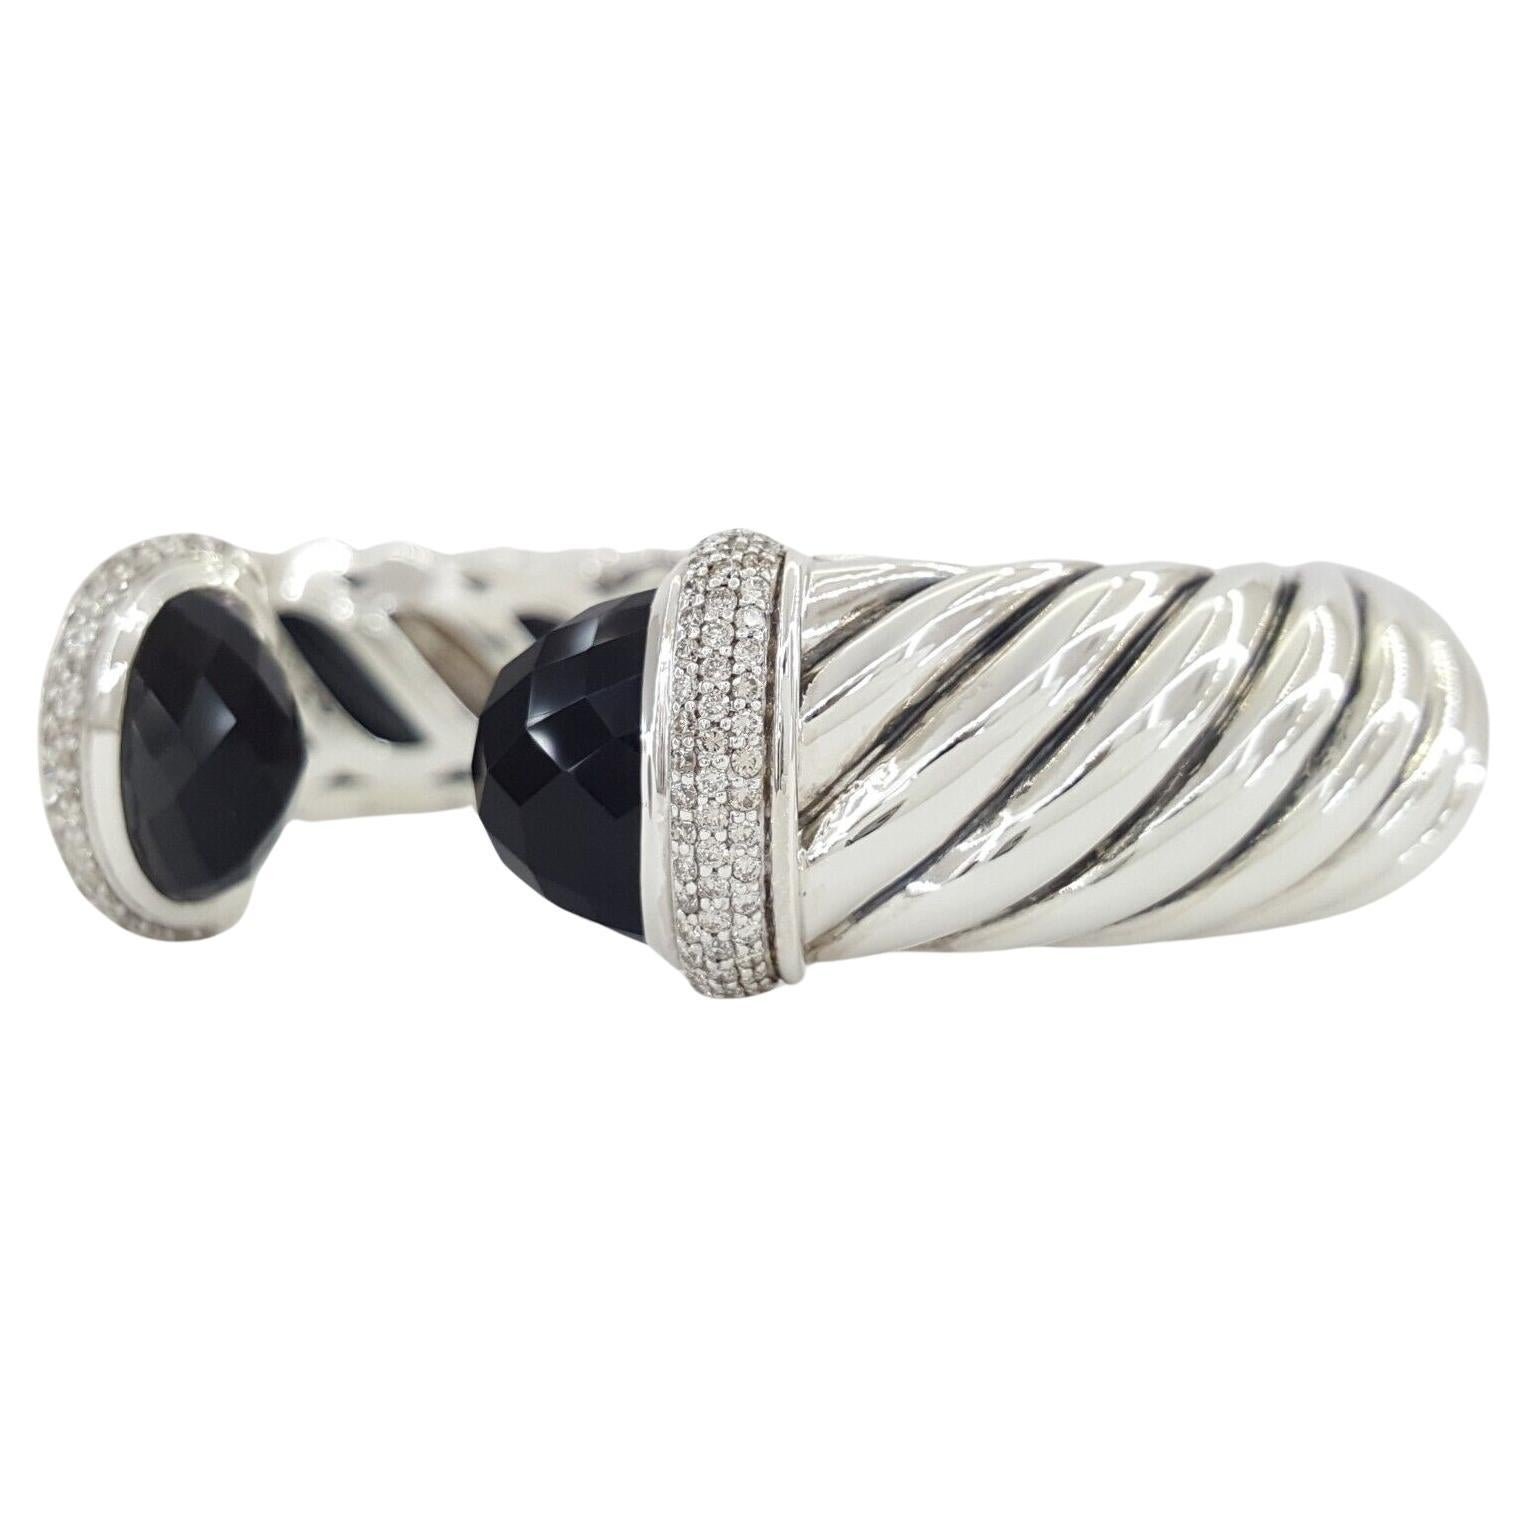 David Yurman Black Onyx & 3/4 ct Round Diamonds 15 mm Cuff Sterling Silver Bangle Bracelet  / Bracelet Size S. 

The bracelet weighs 41.5 grams, Small Size. This fits 6-6.25